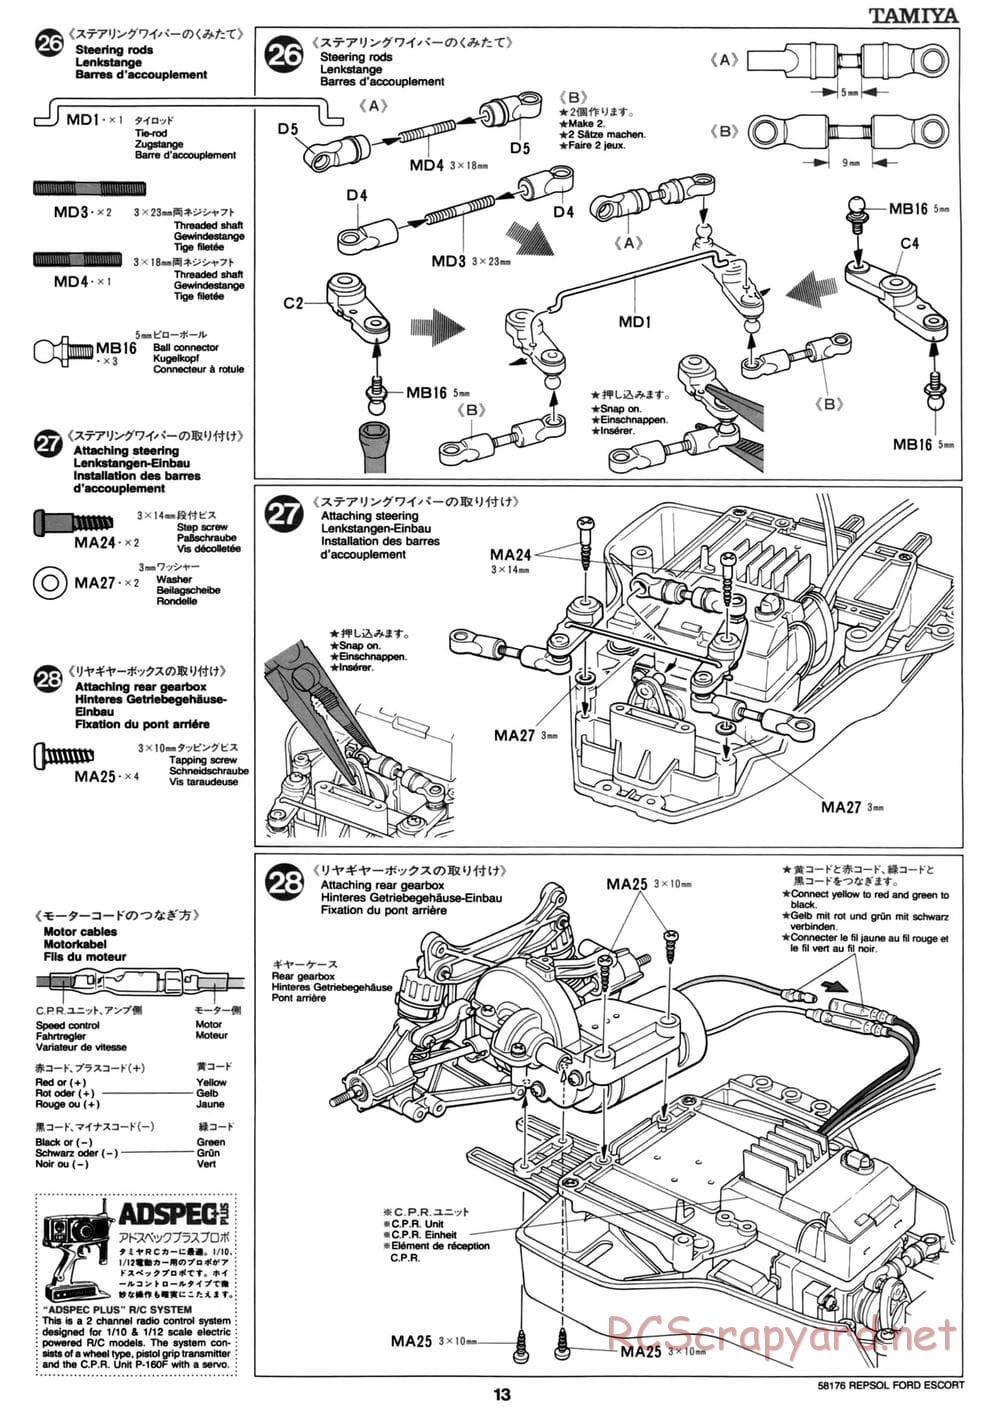 Tamiya - Repsol Ford Escort RS Cosworth - TA-02 Chassis - Manual - Page 13